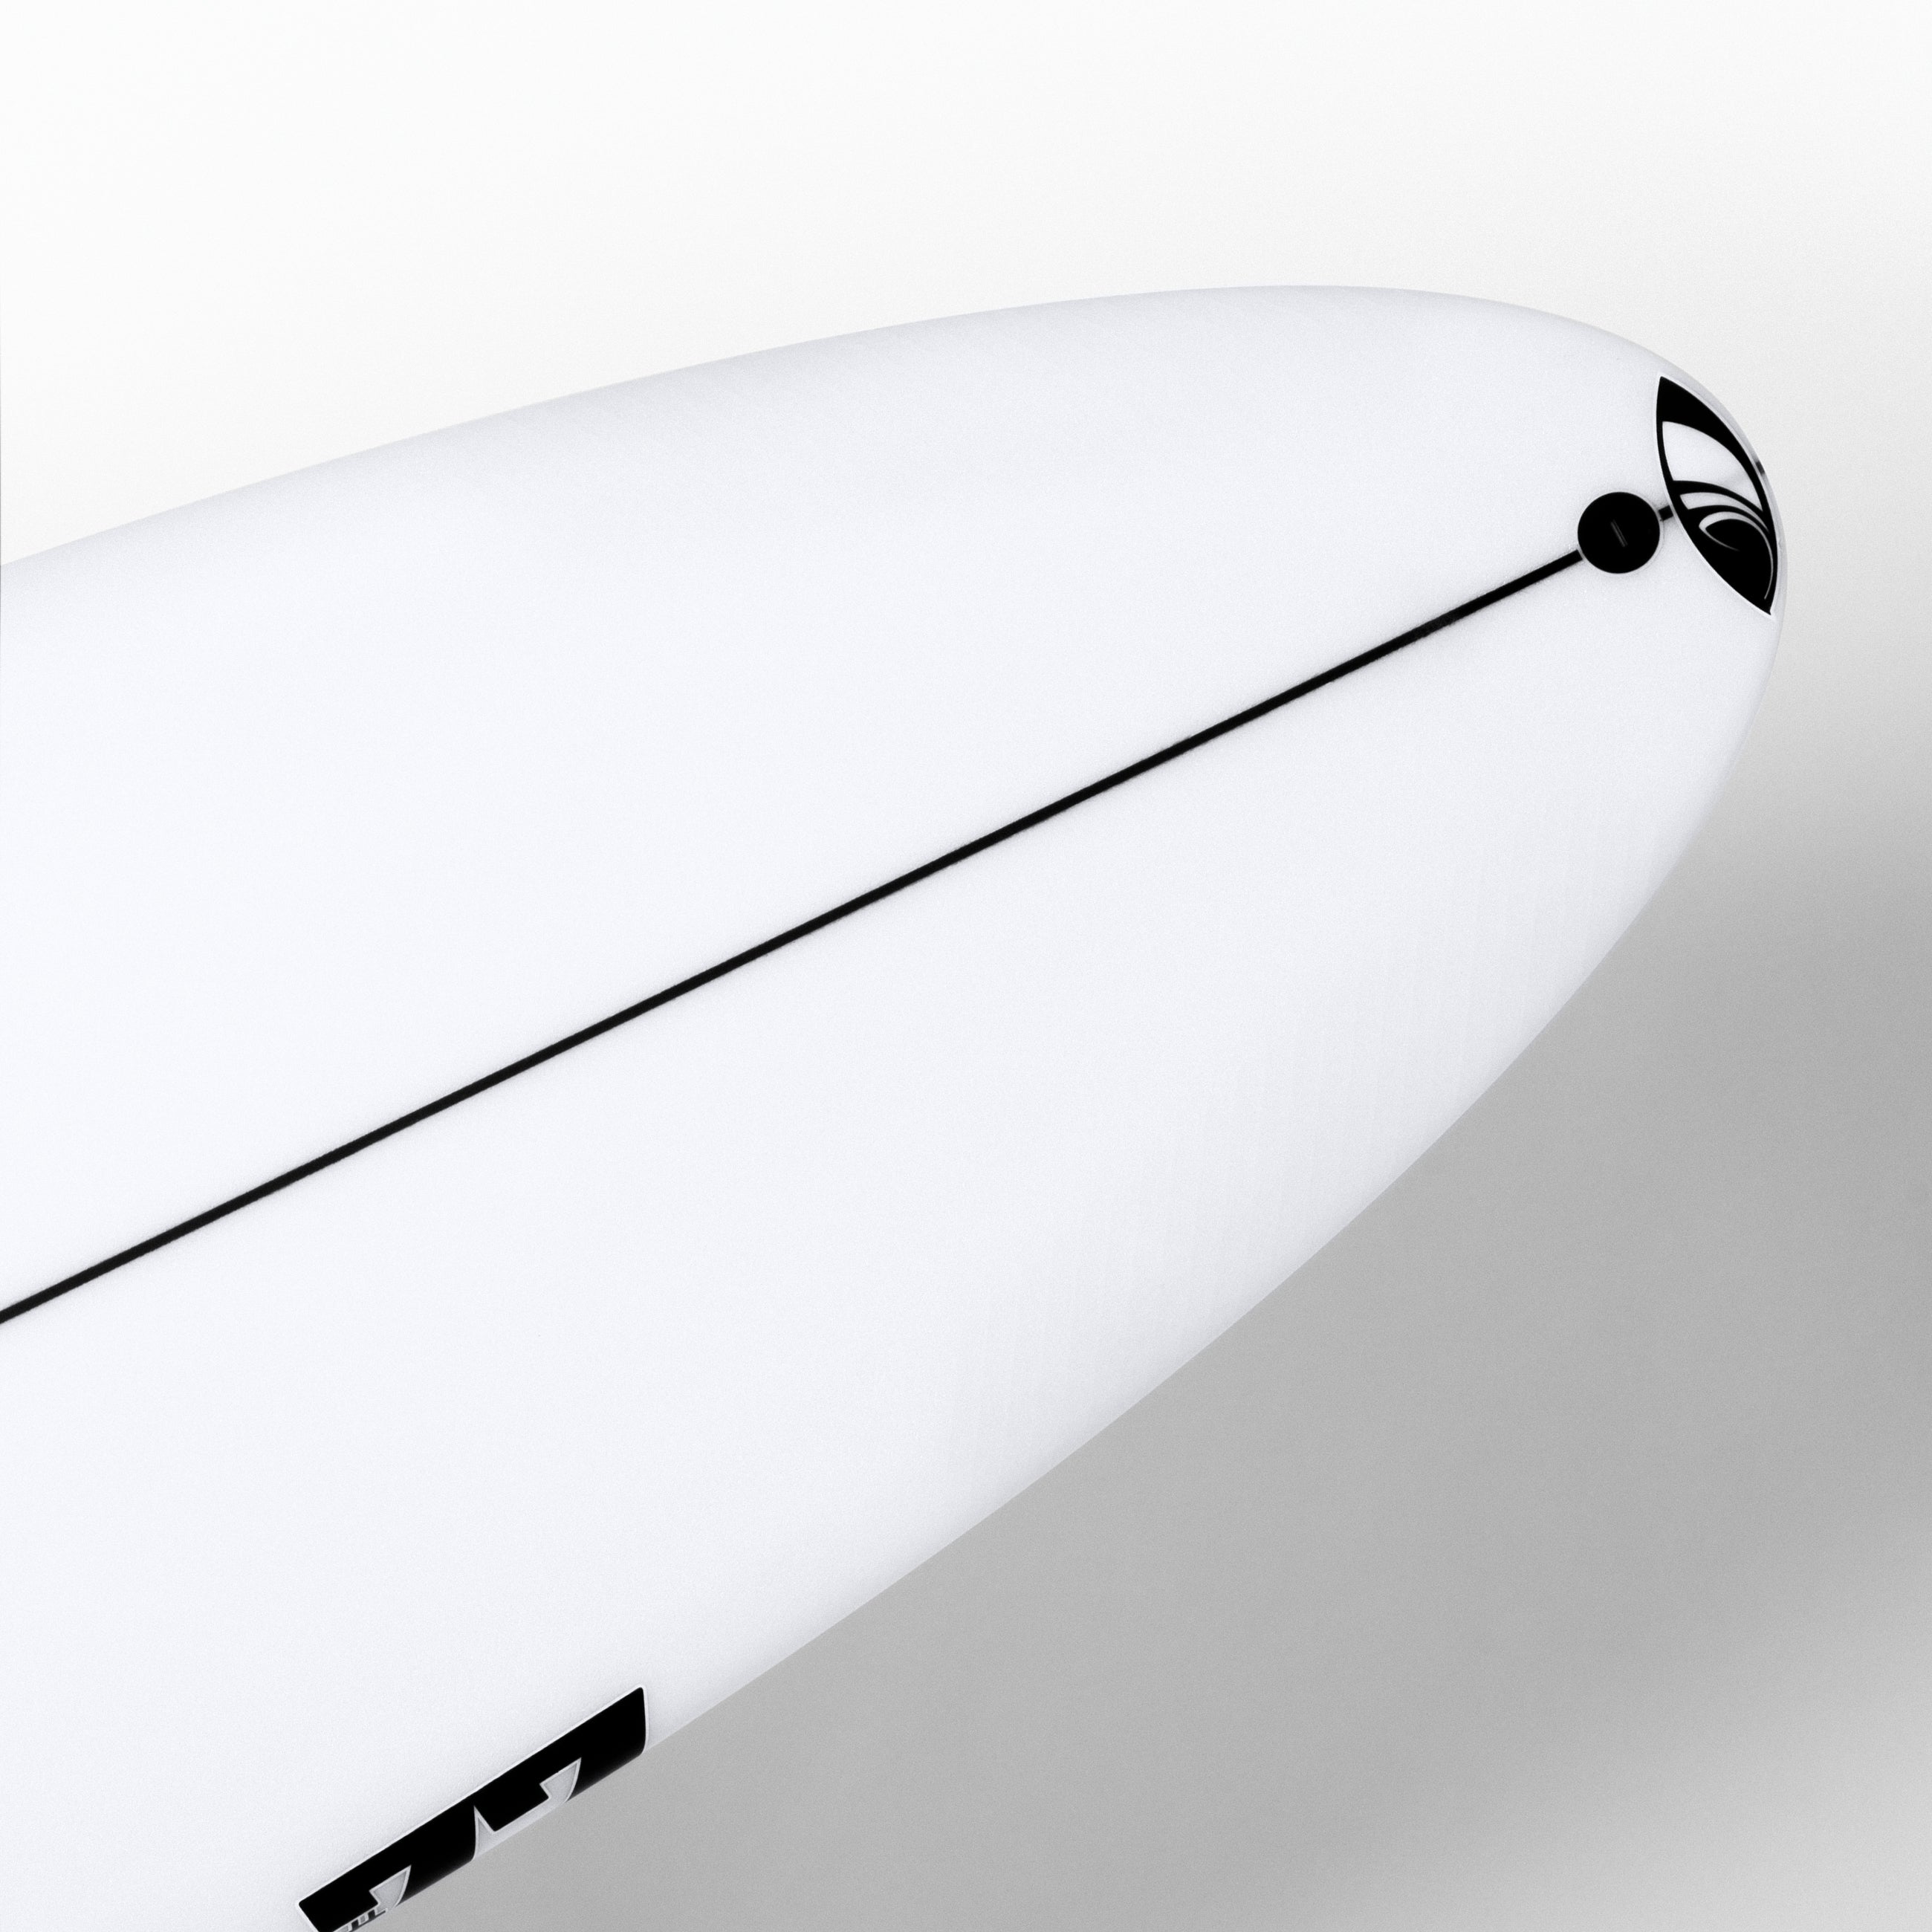 HOLY TOLEDO #77 Surfboard | Sharp Eye Surfboards